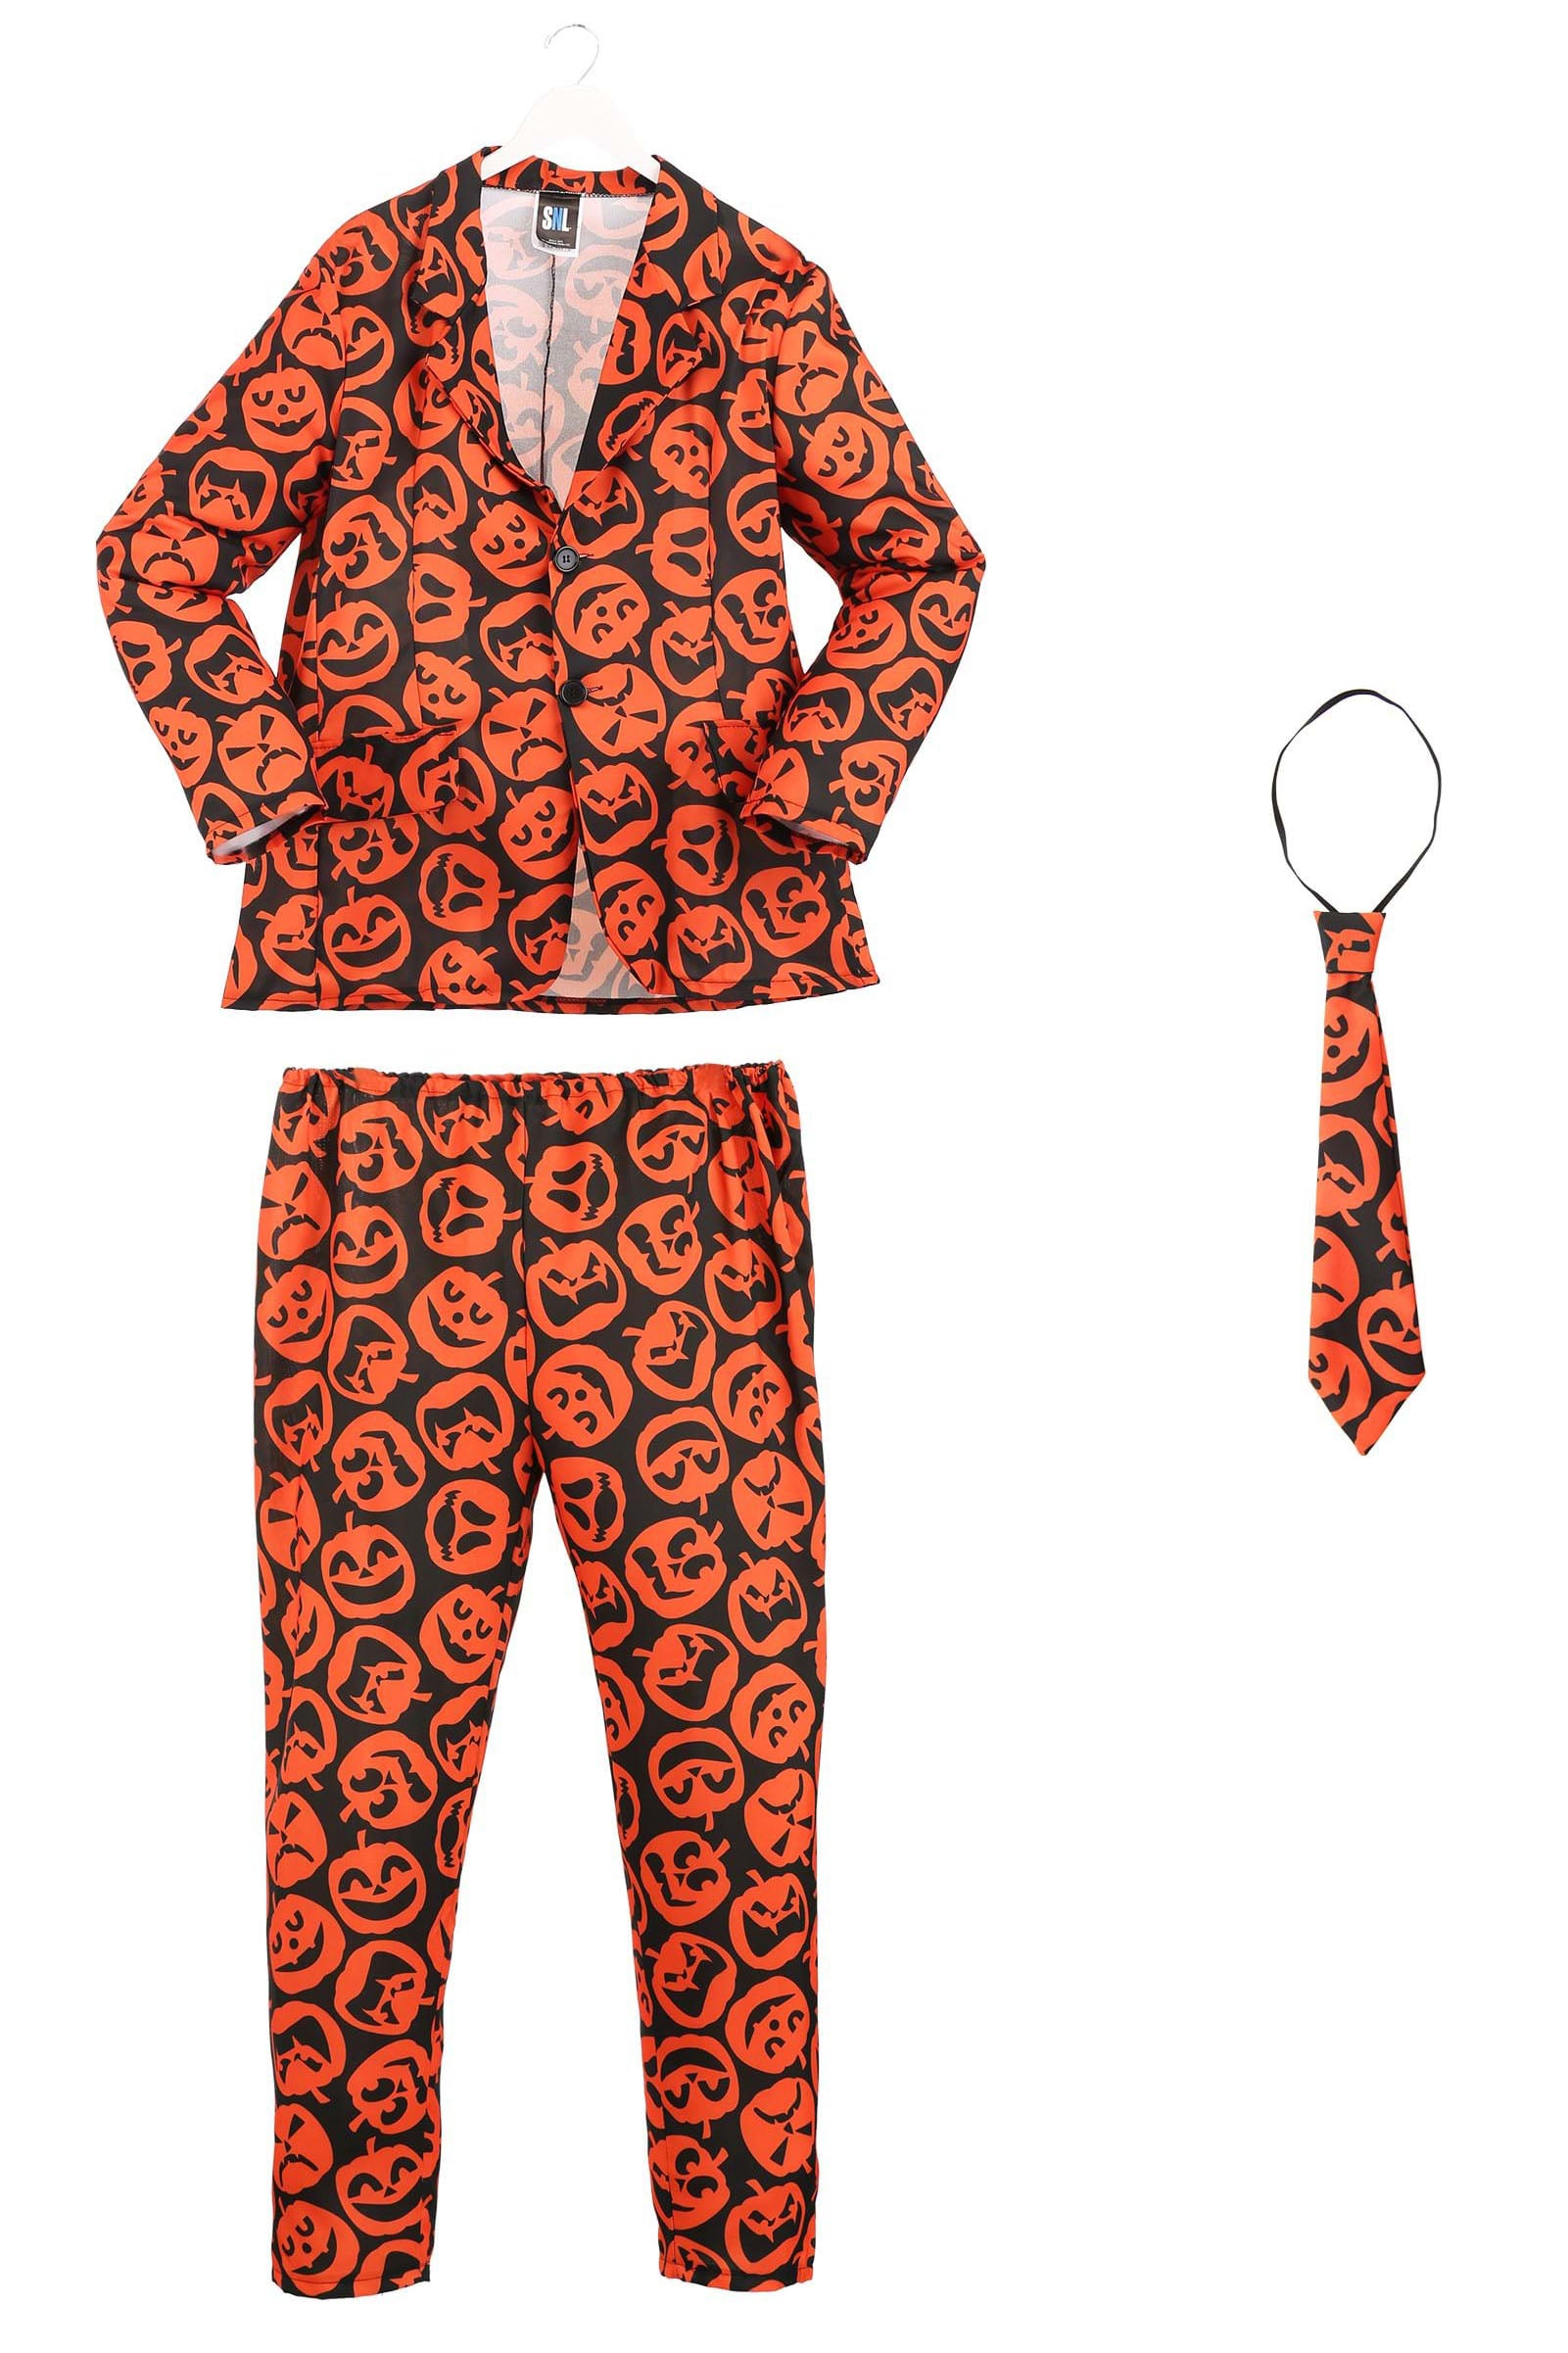 Men's David S. Pumpkins Costume